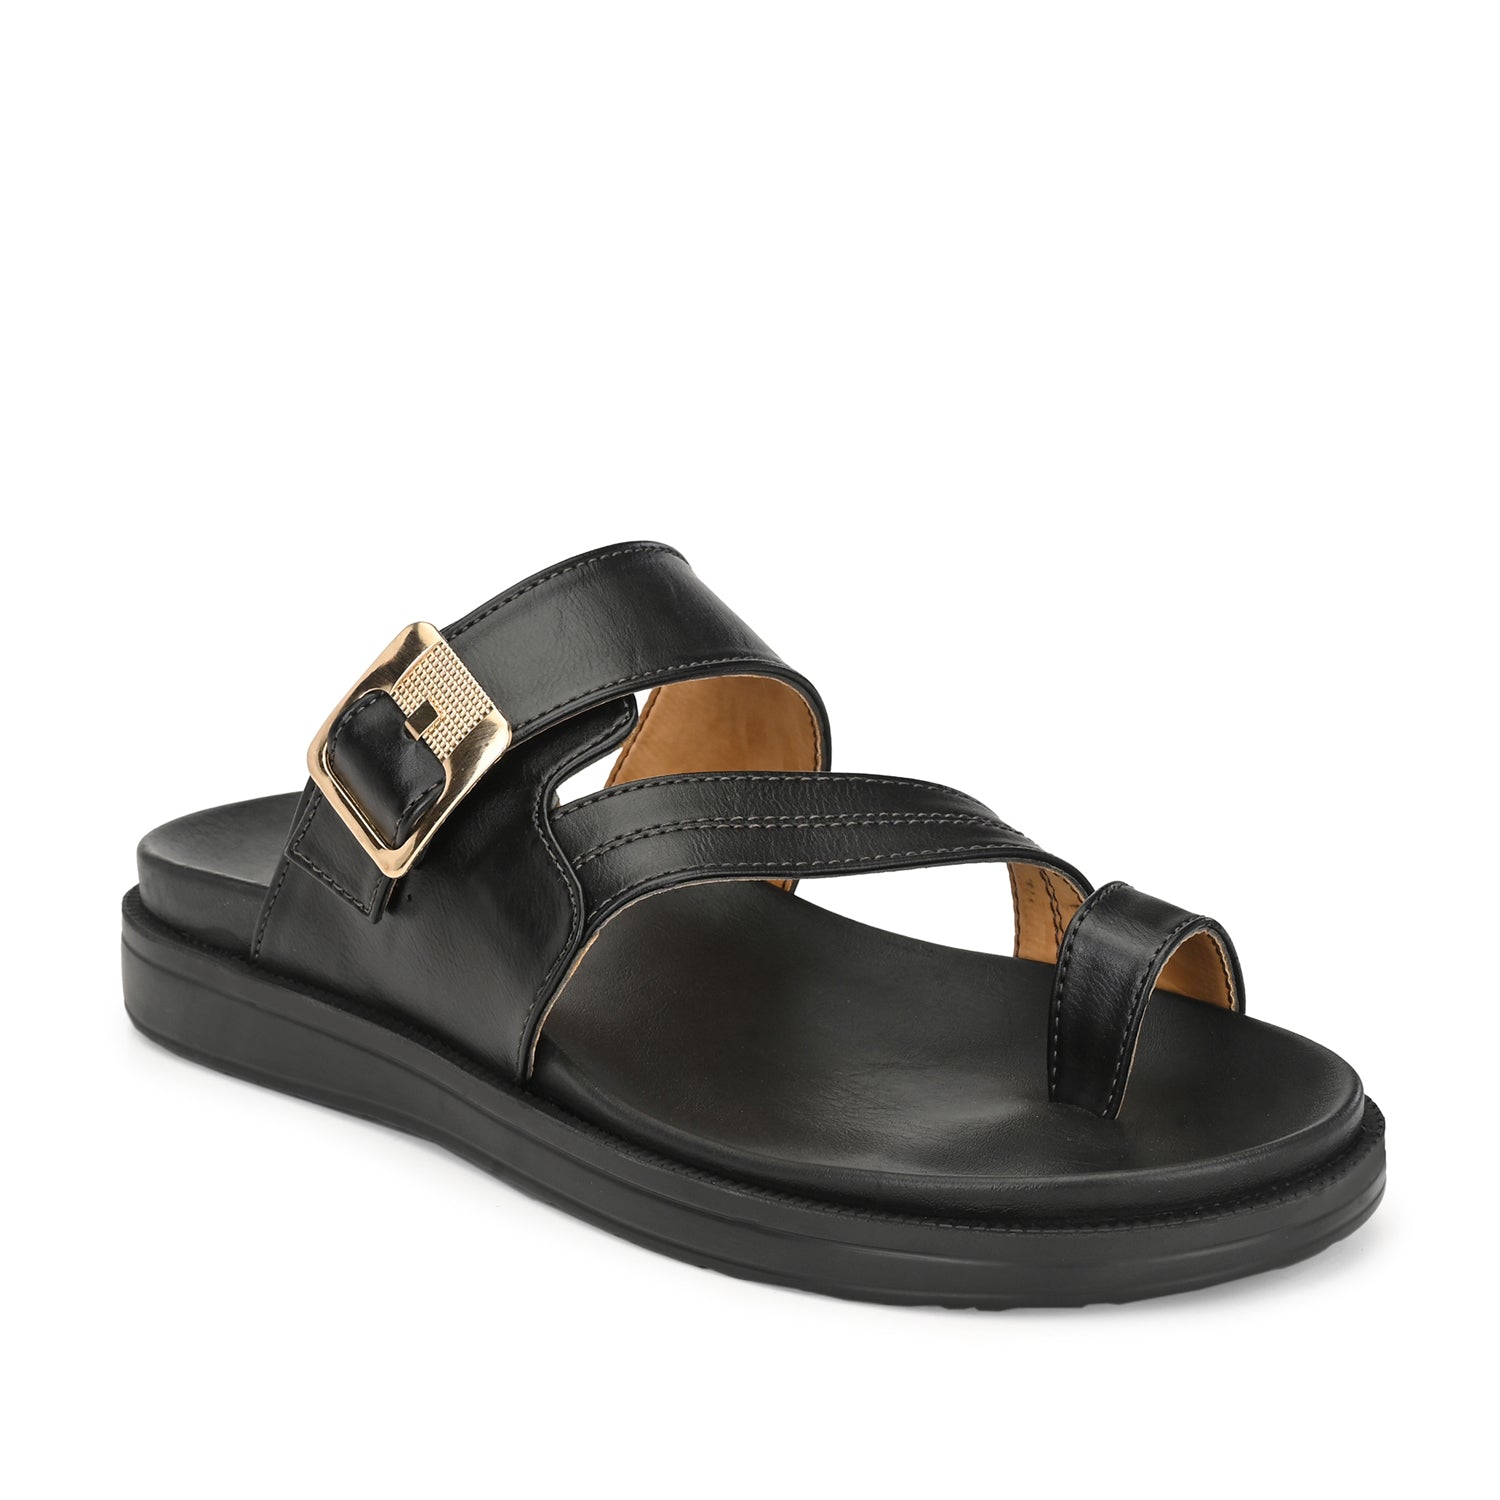 black sandals for men gucchi comfort sandals latest casual sandals Party  wear sandals